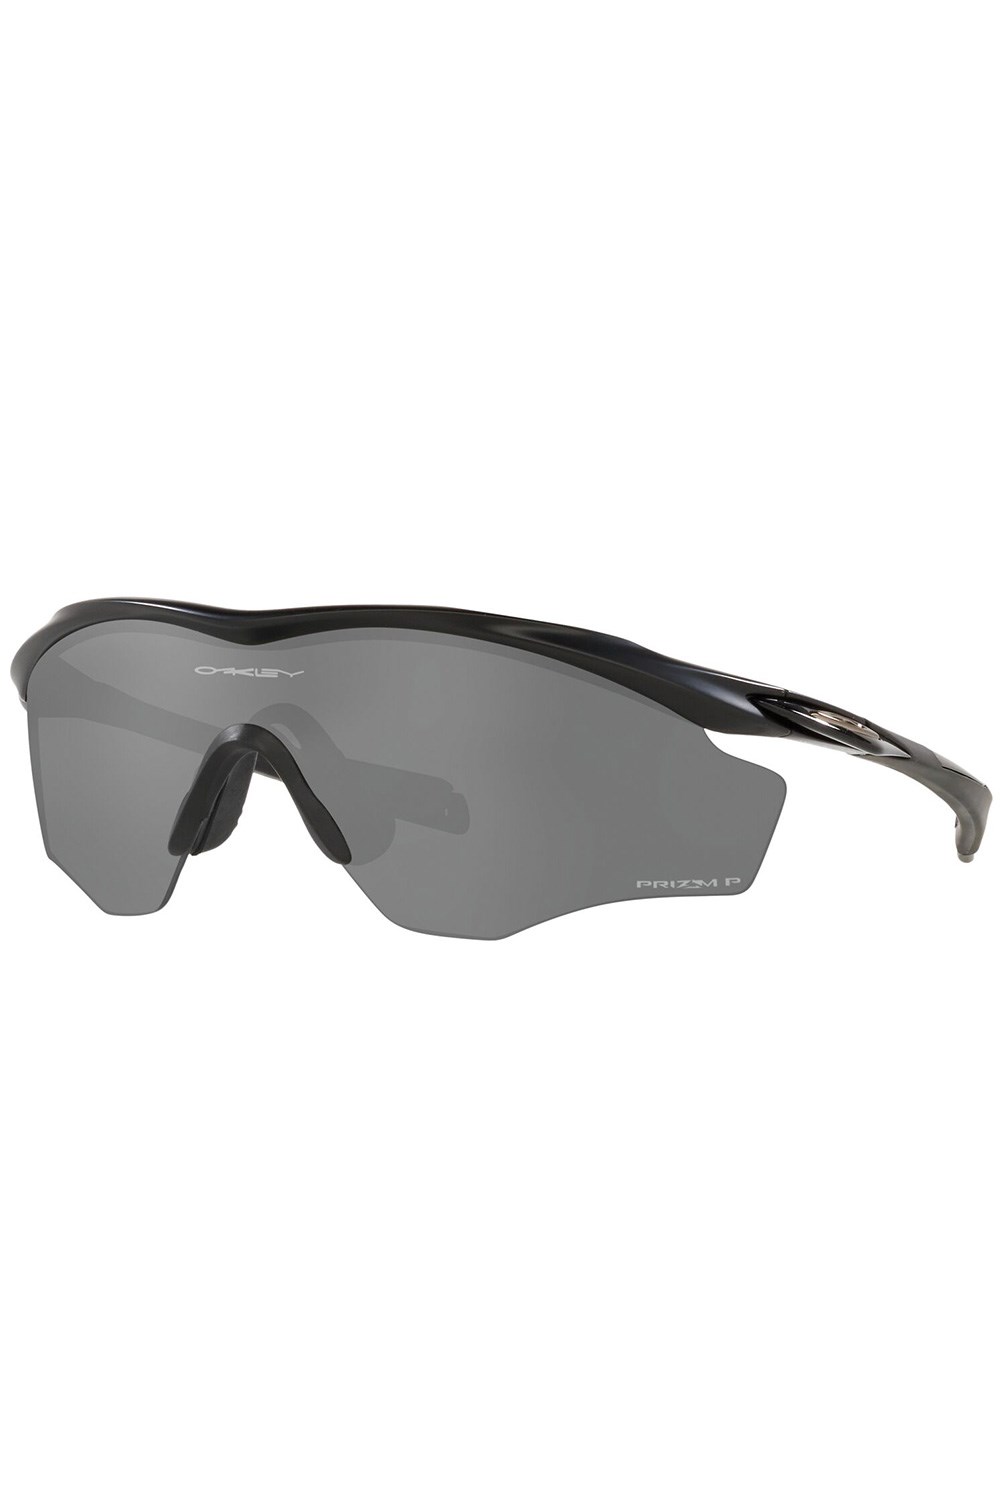 M2 Frame Xl Unisex Cycling Sunglasses -